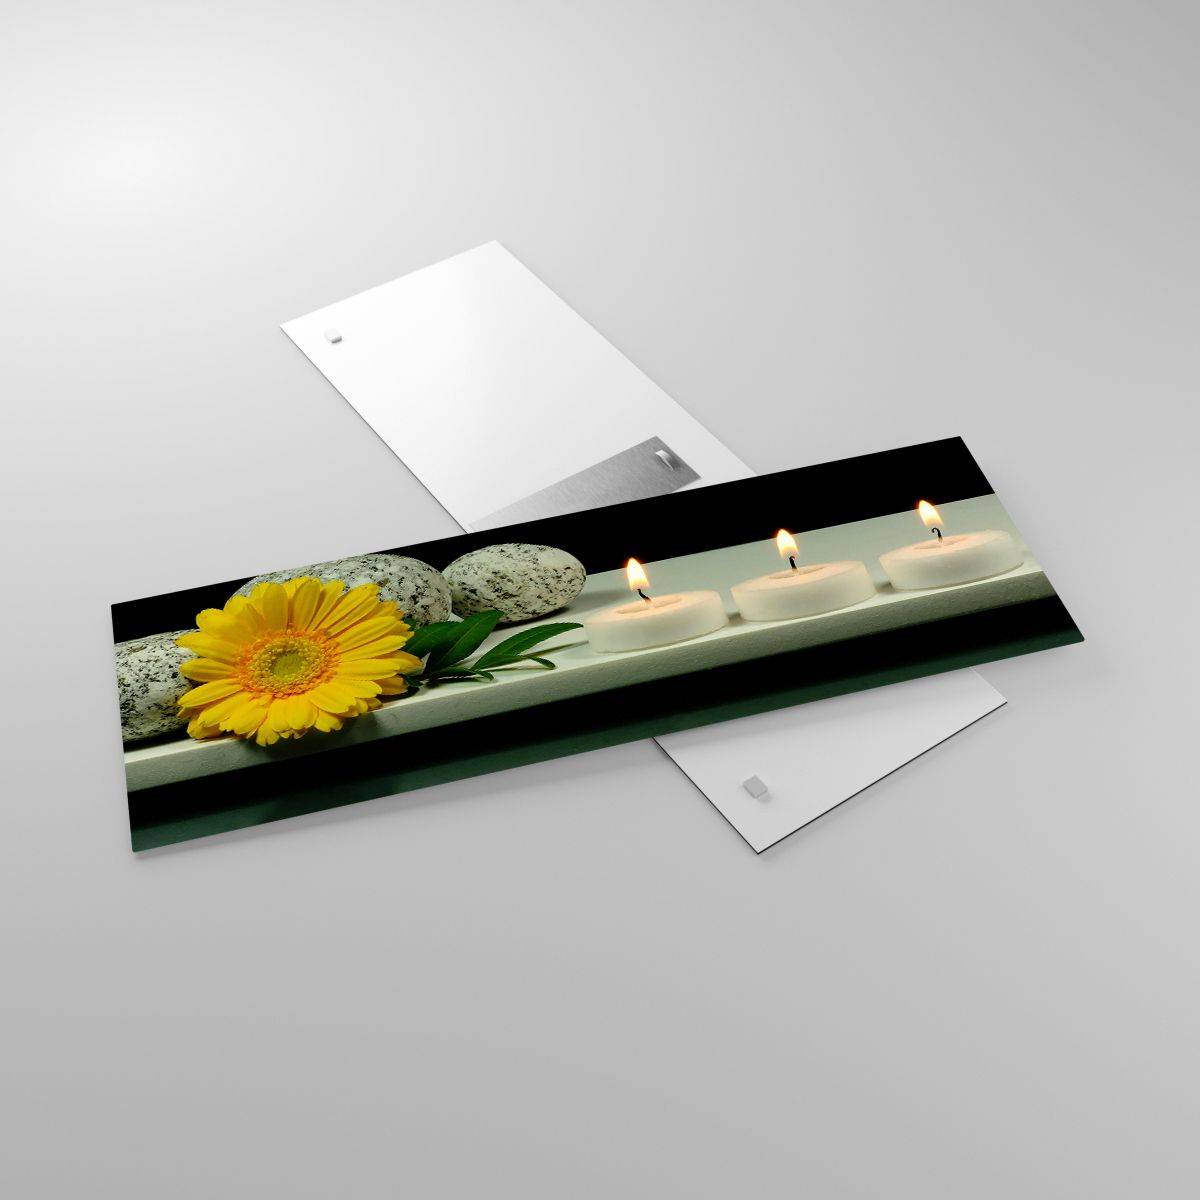 Glasbild Blumen, Glasbild  Spa, Glasbild Kerzen, Glasbild Gerbera, Glasbild Entspannung